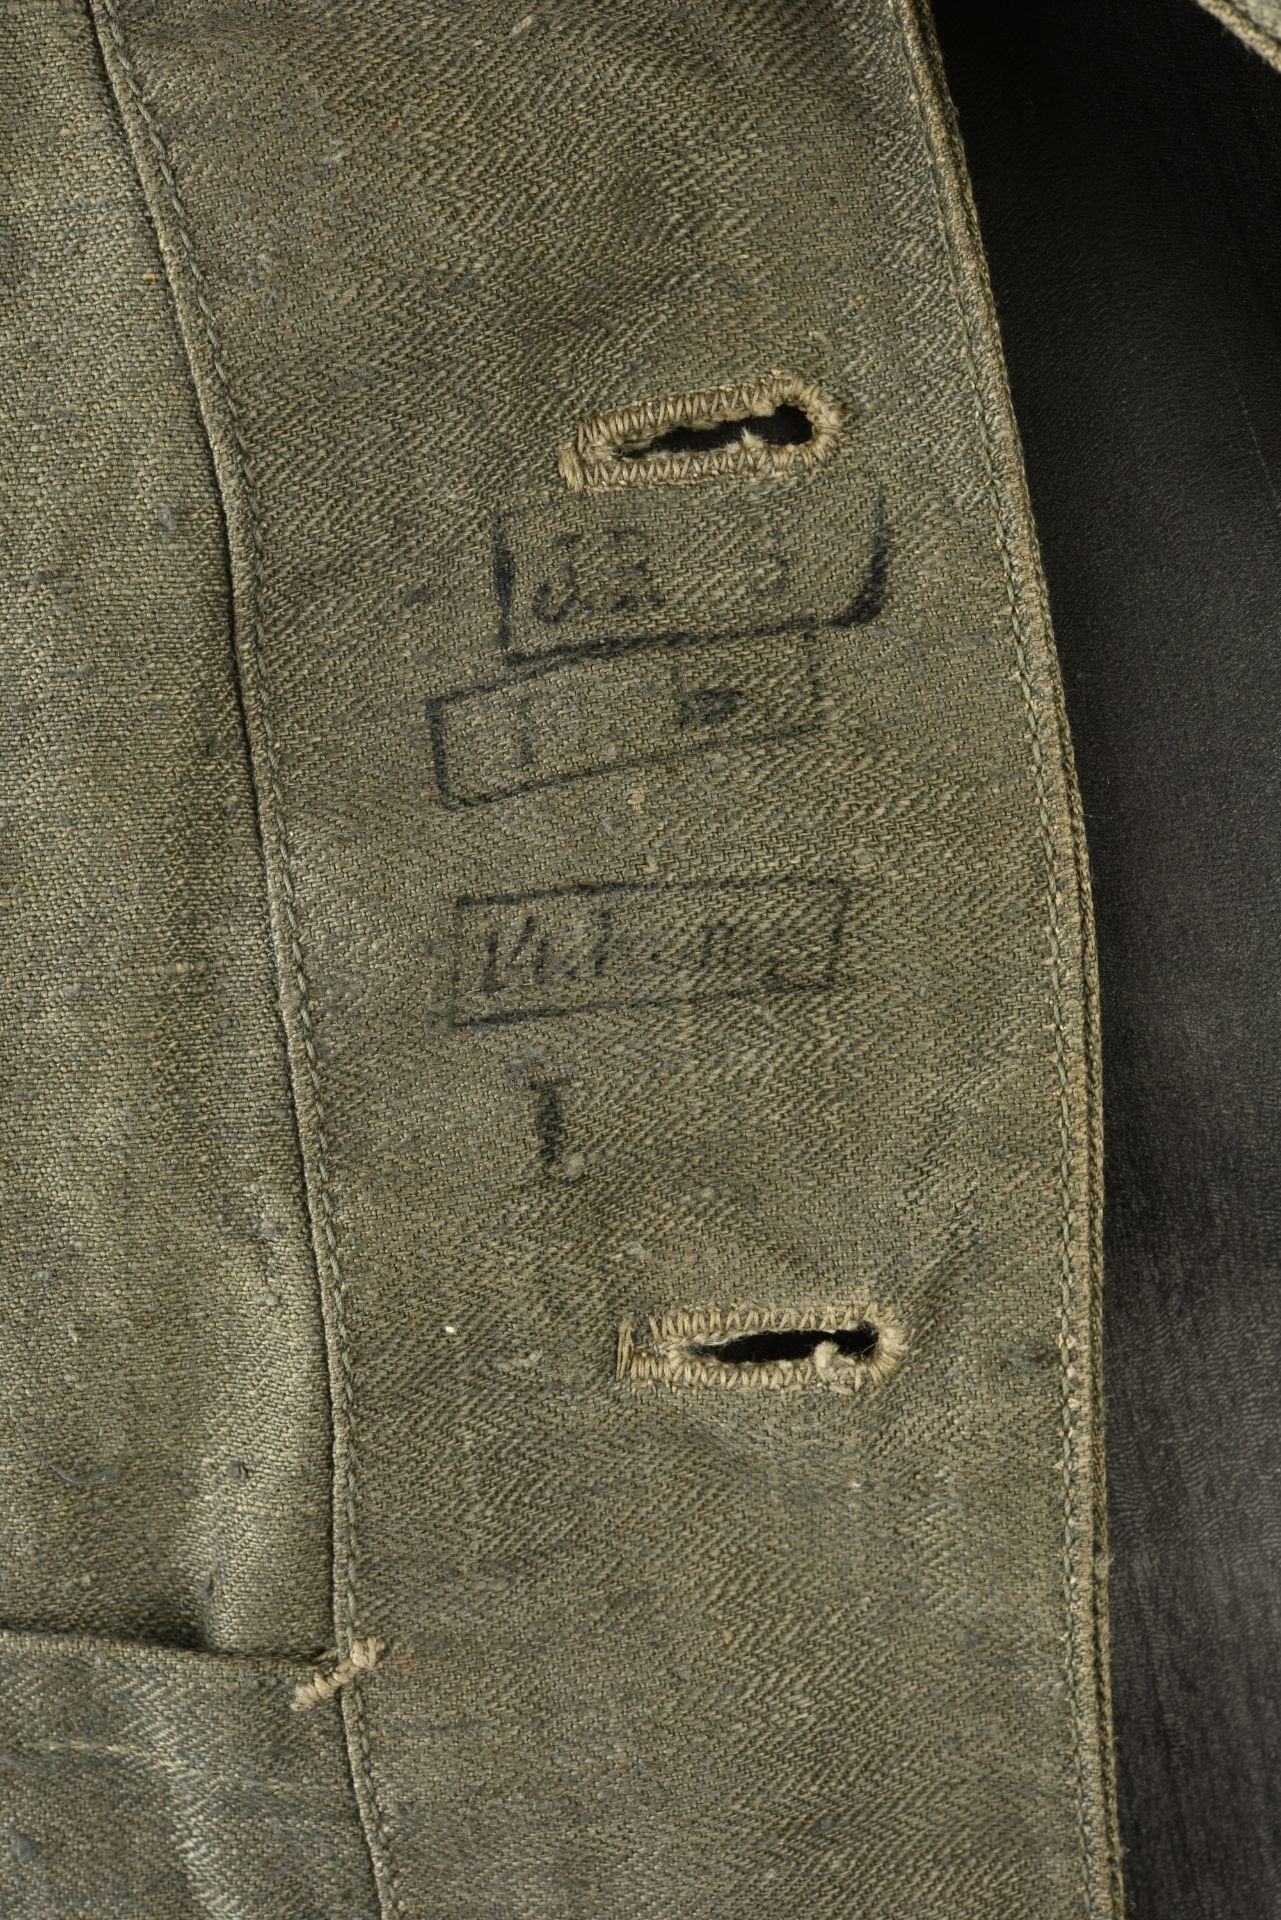 WWI German Jacket - Bild 2 aus 5